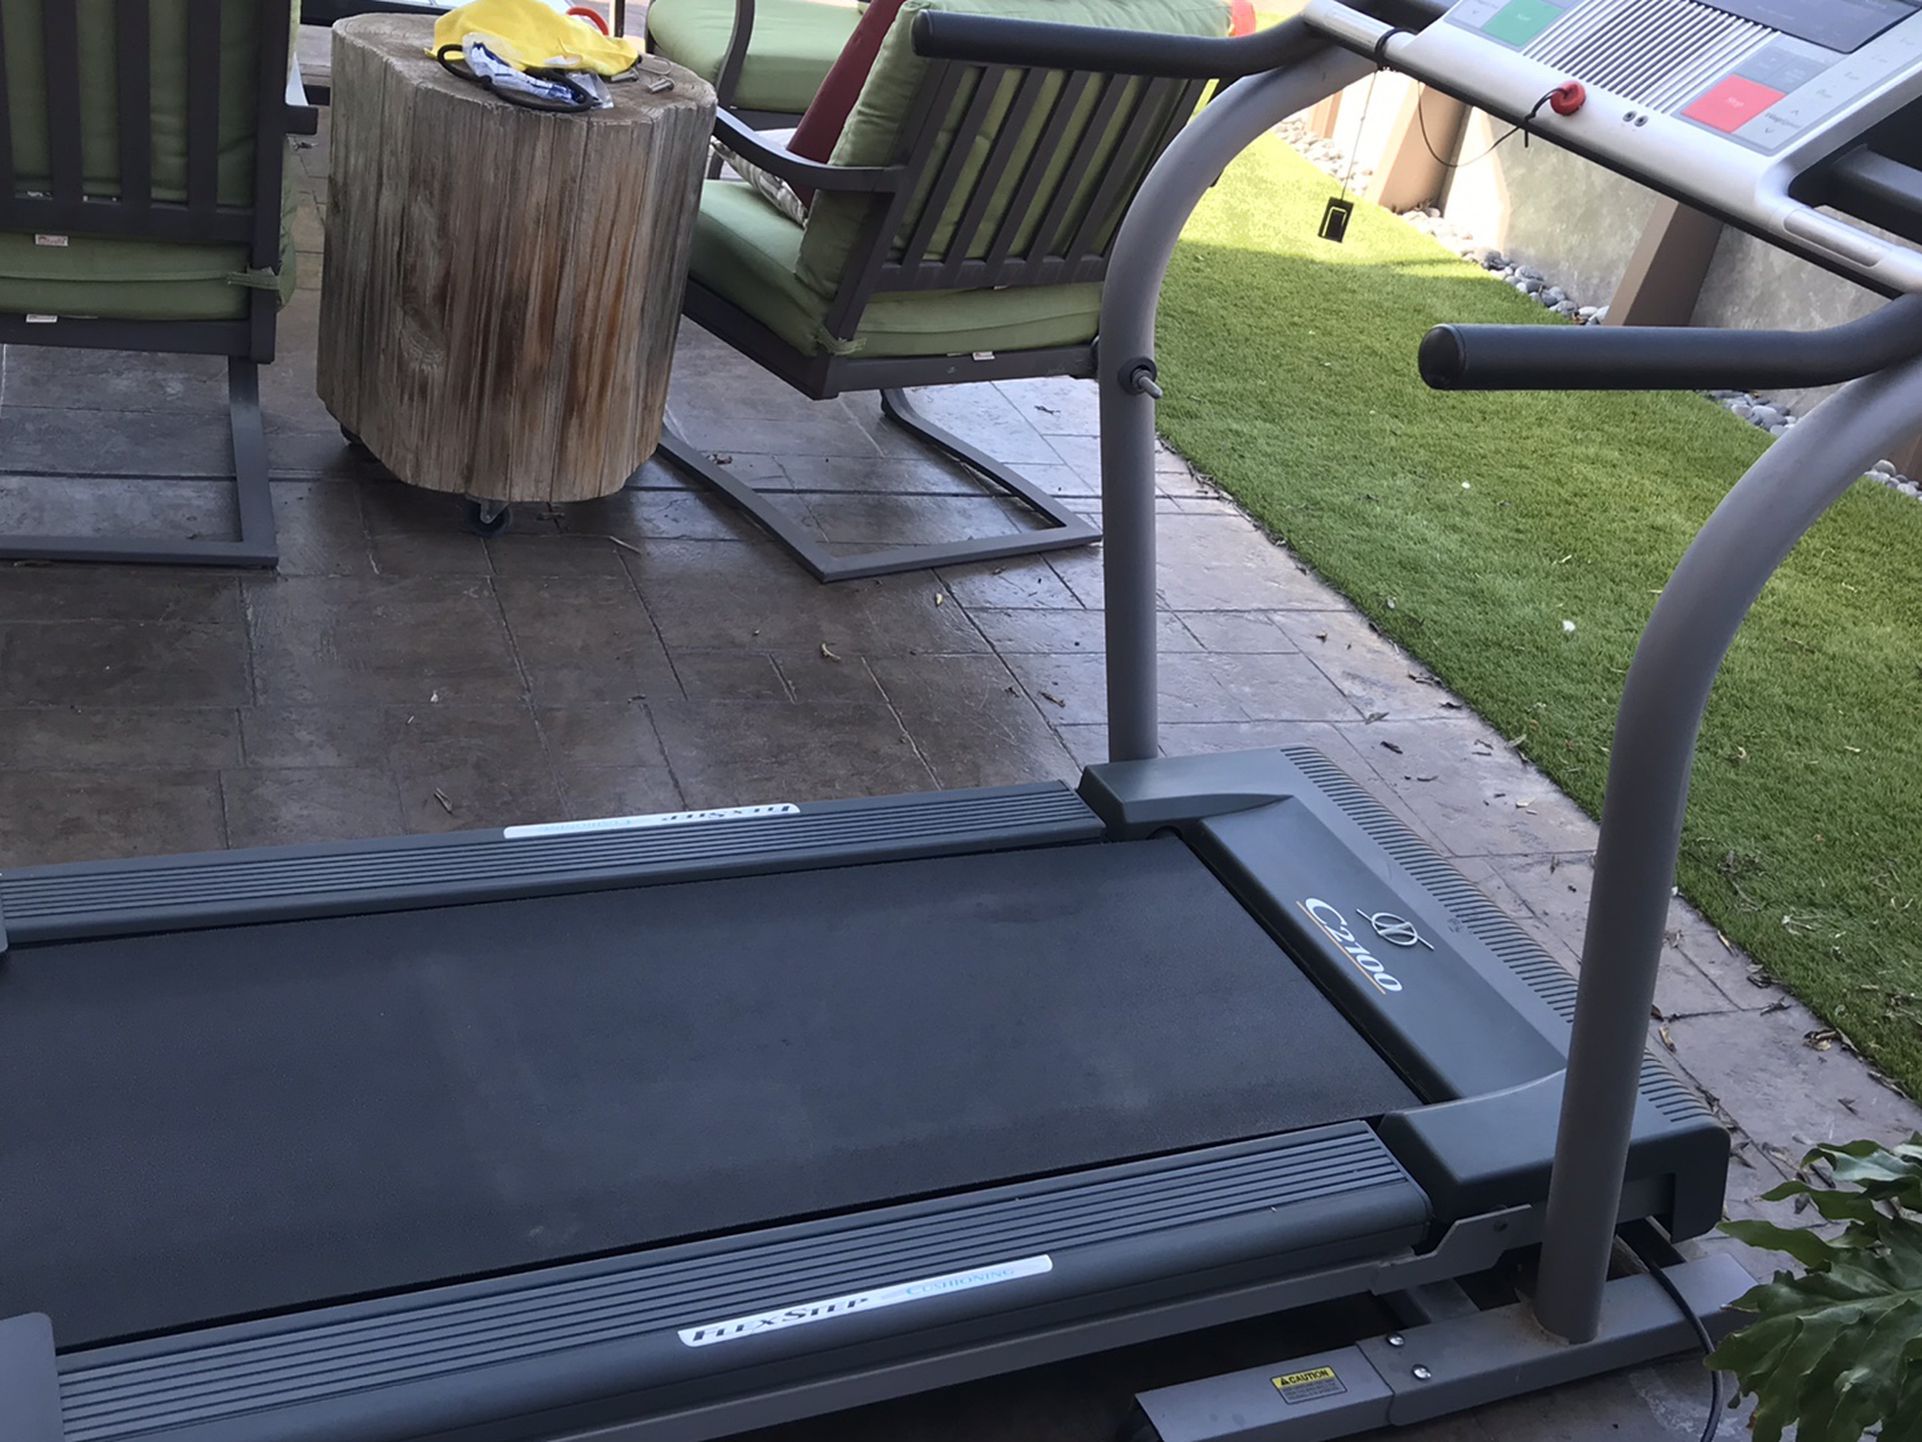 NordicTrack Treadmill For Sale C2100